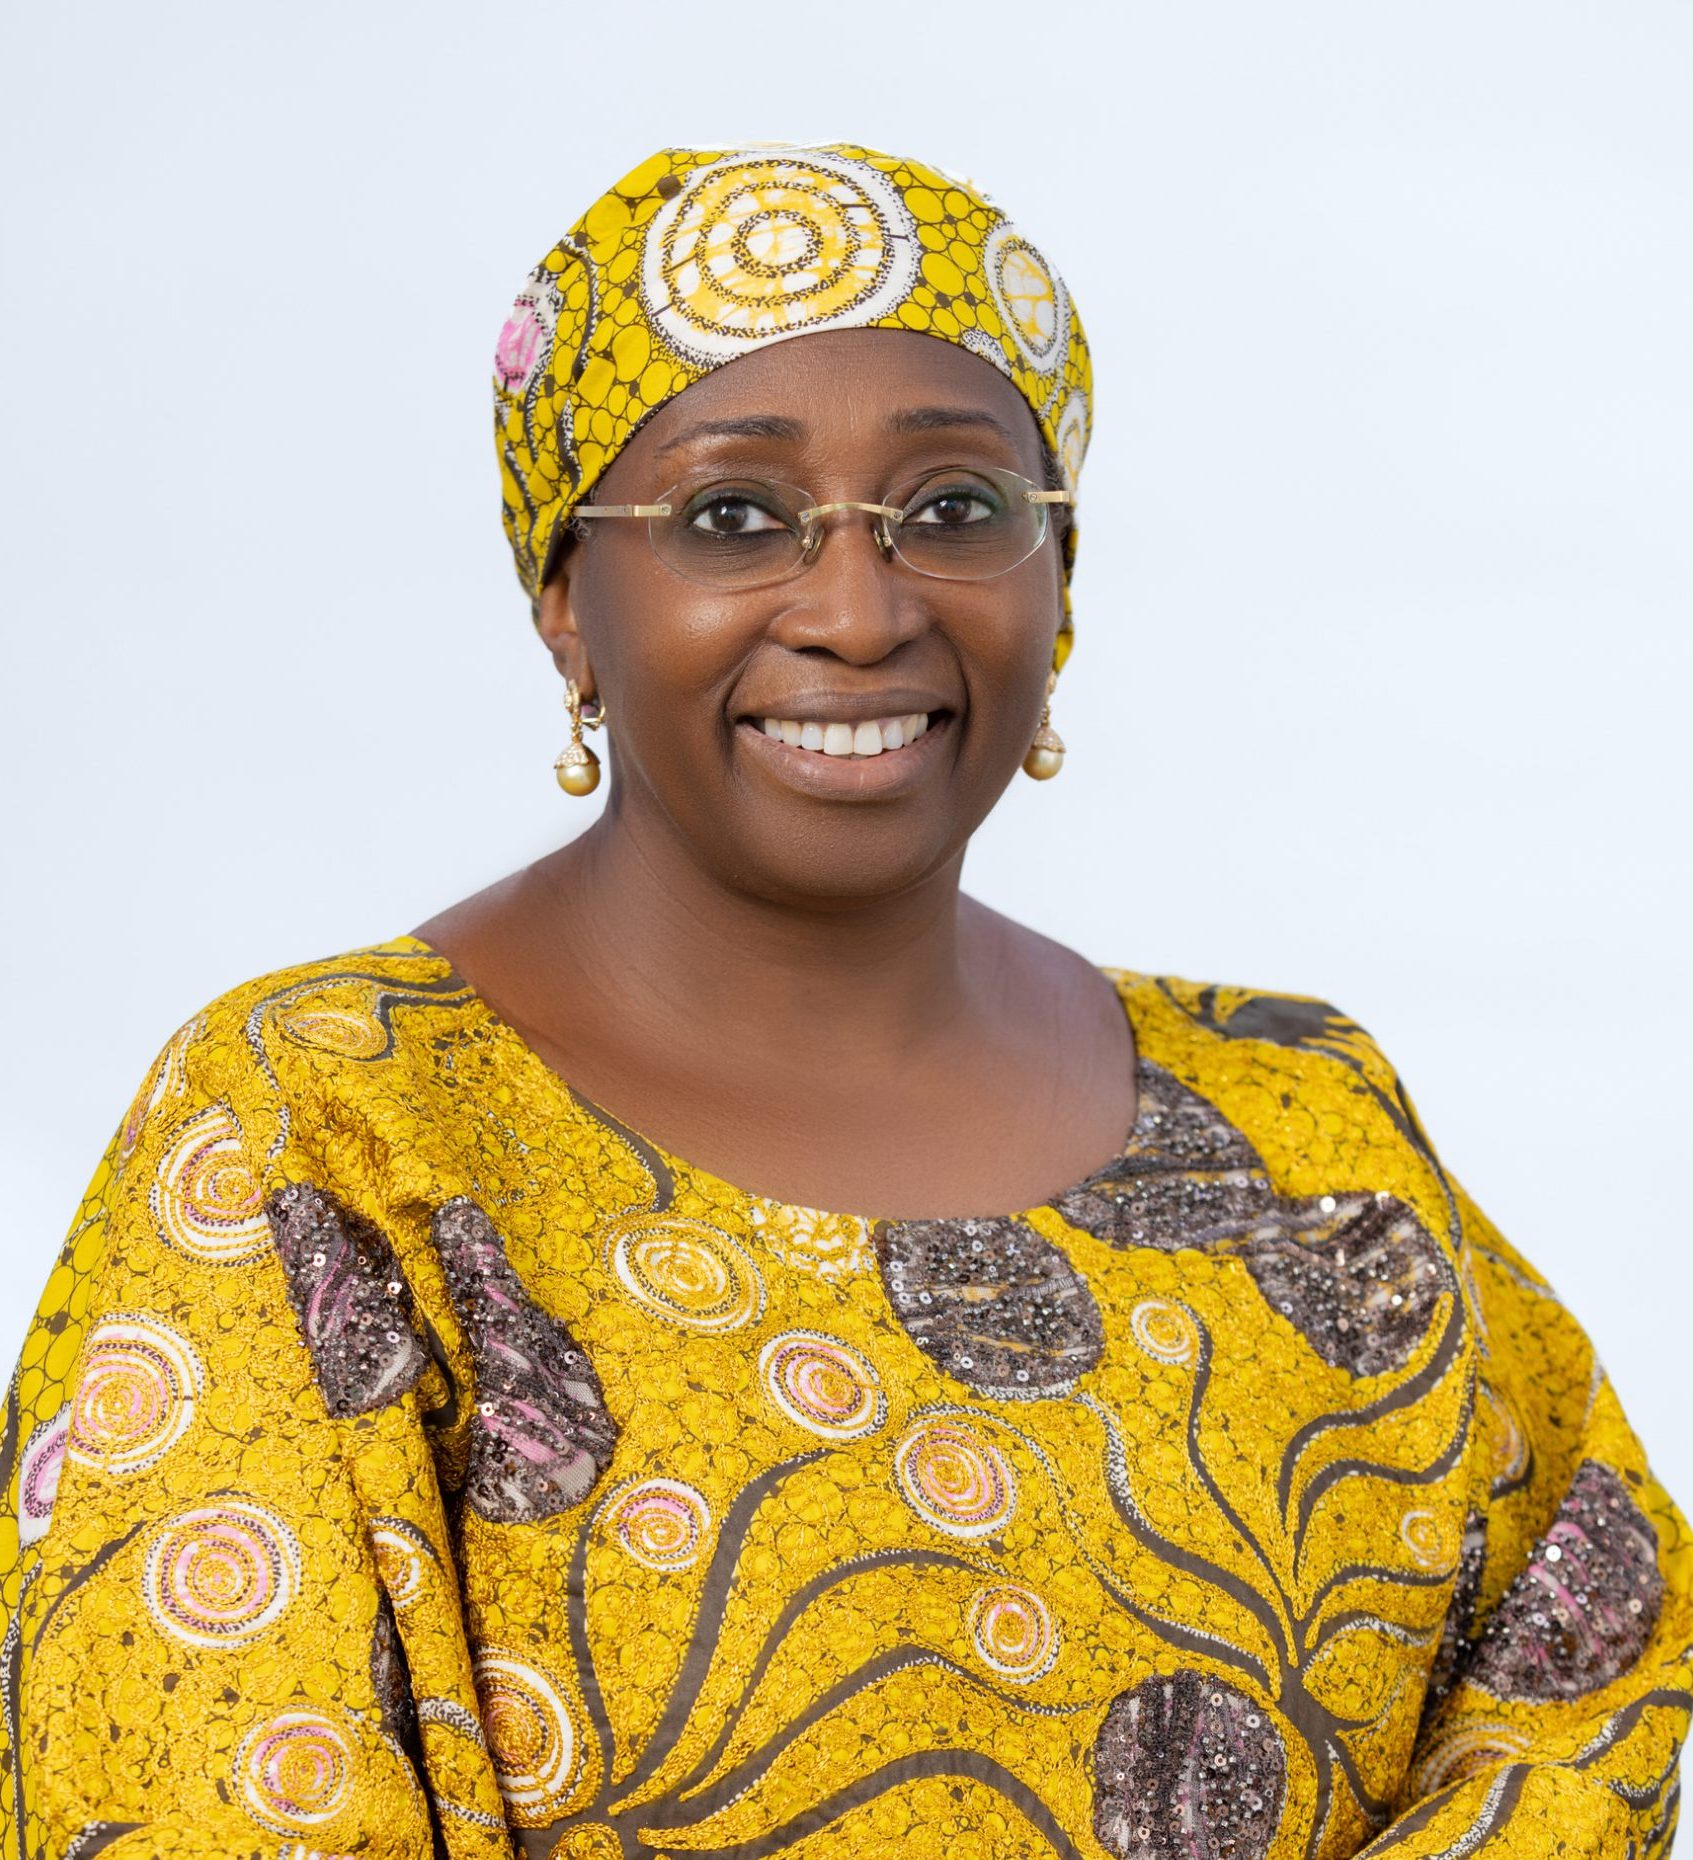 Ms Mabel Ndagi